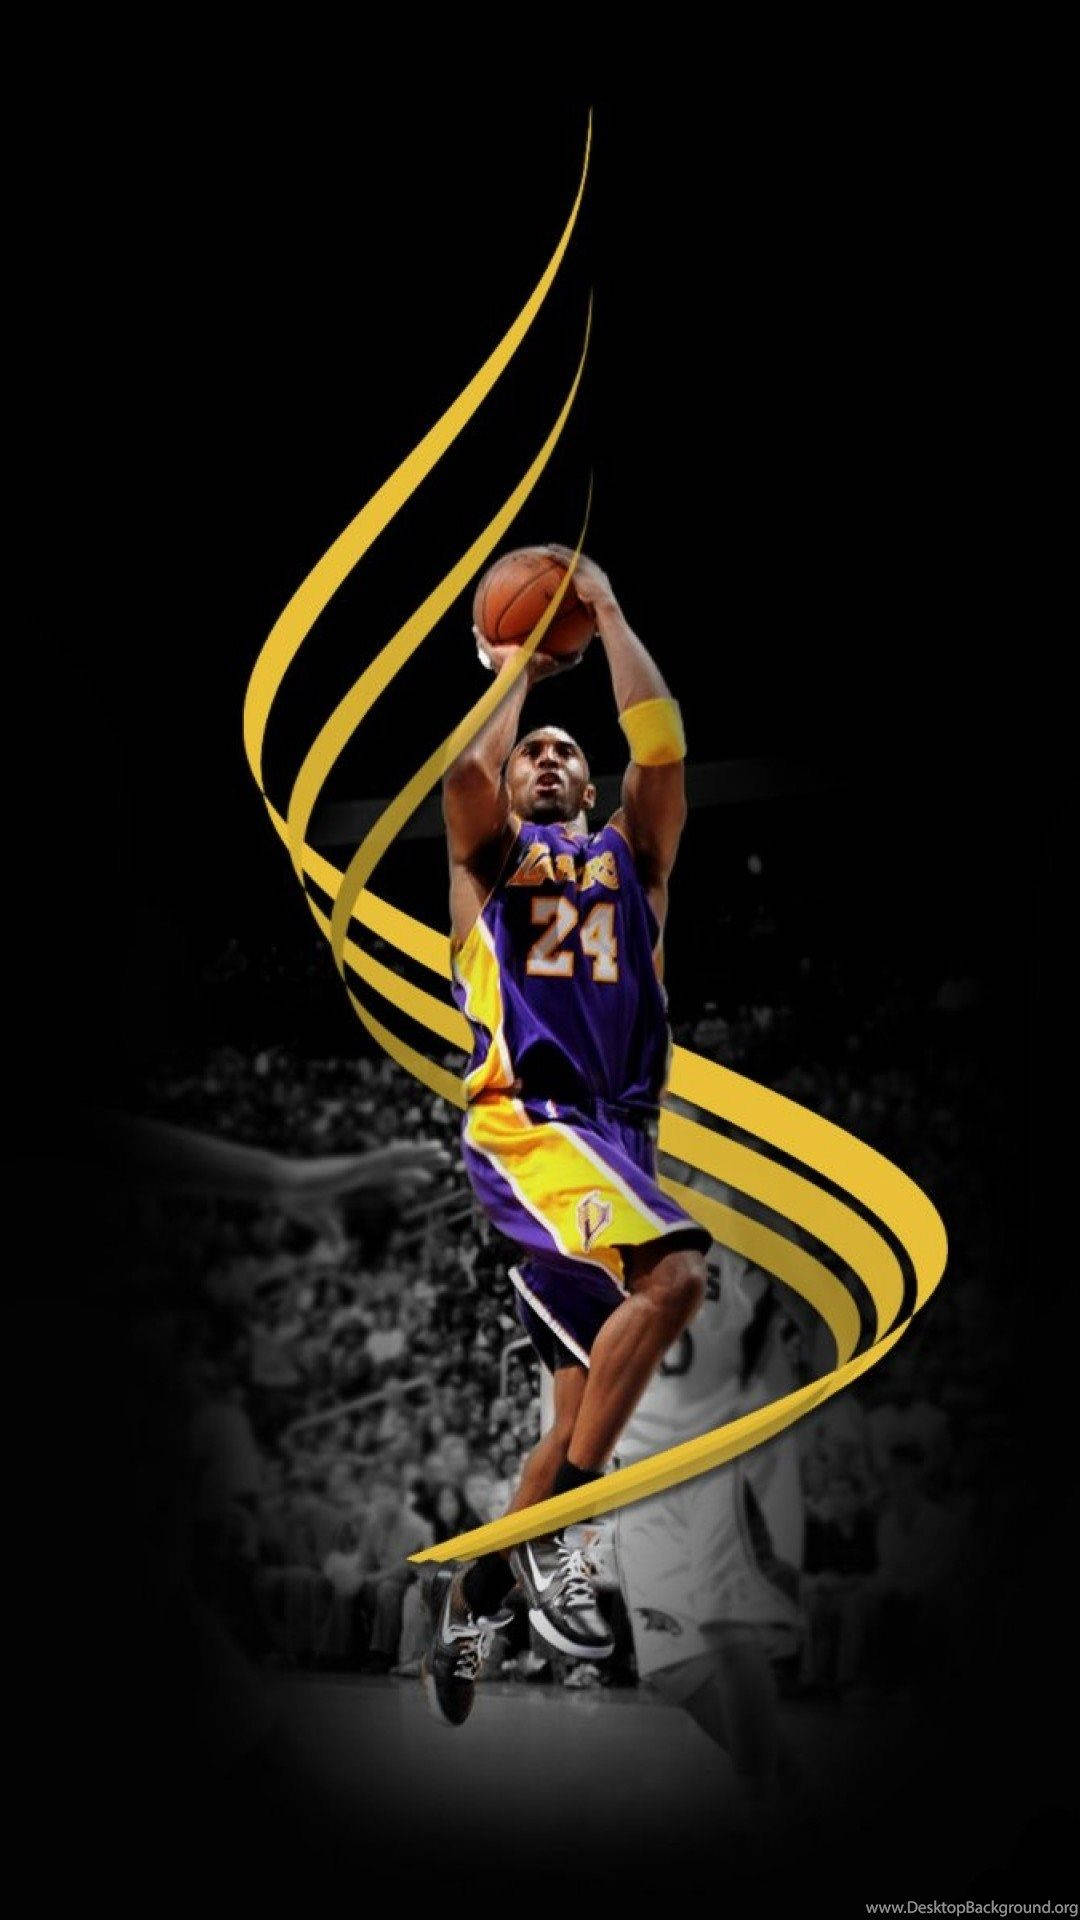 LA Lakers iPhone Wallpapers  Wallpaper Cave